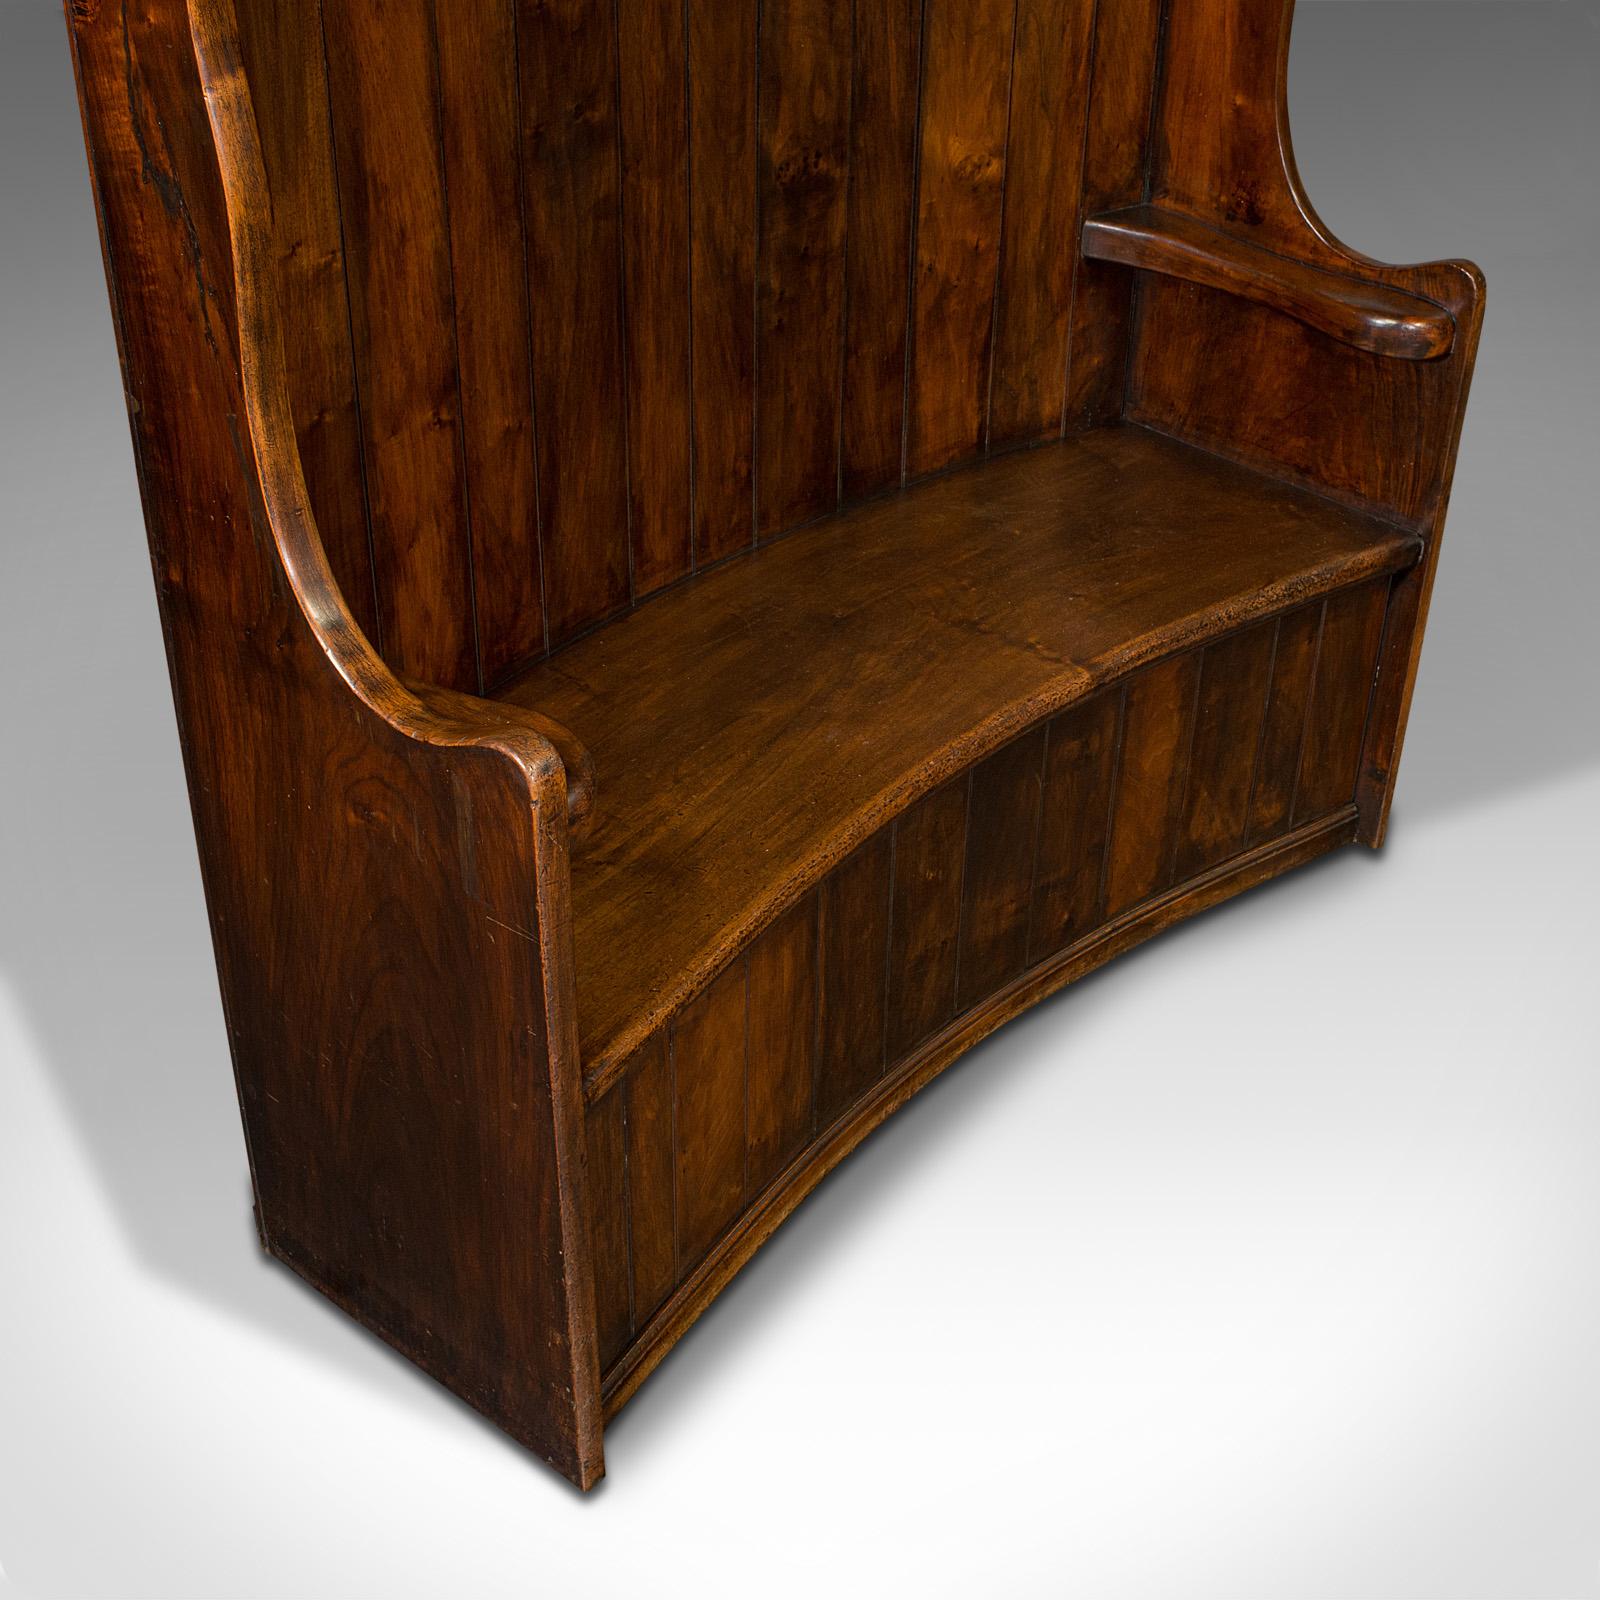 Large Antique Bow Form Settle, English, Elm, Oak, Bench Seat, Georgian, C.1750 1